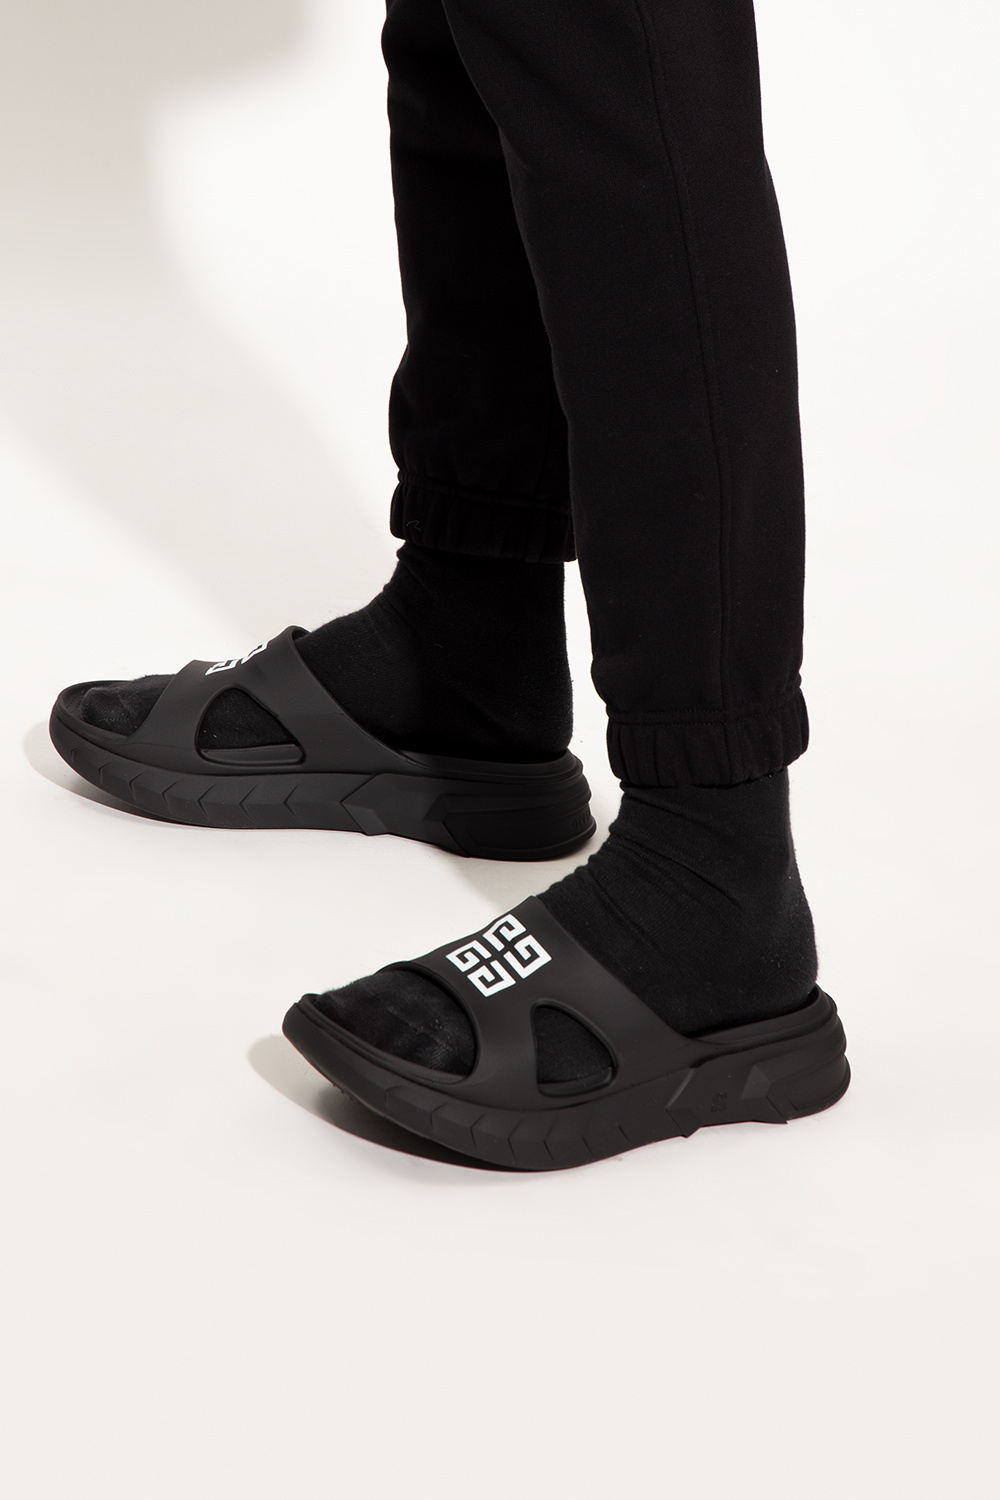 Givenchy 'Marshmallow' slides | Men's Shoes | Vitkac